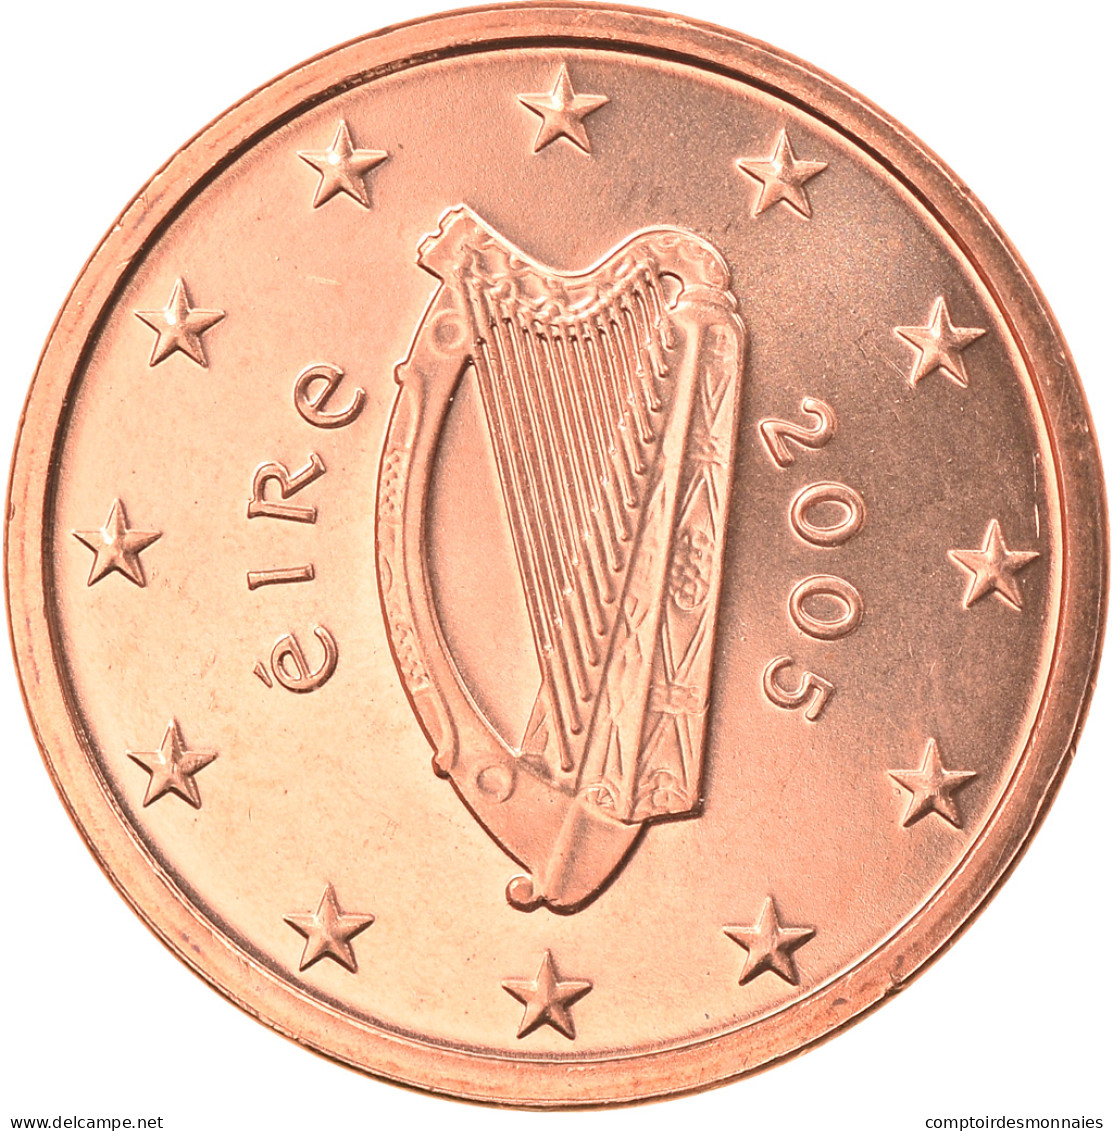 IRELAND REPUBLIC, Euro Cent, 2005, Sandyford, FDC, Copper Plated Steel, KM:32 - Irlande